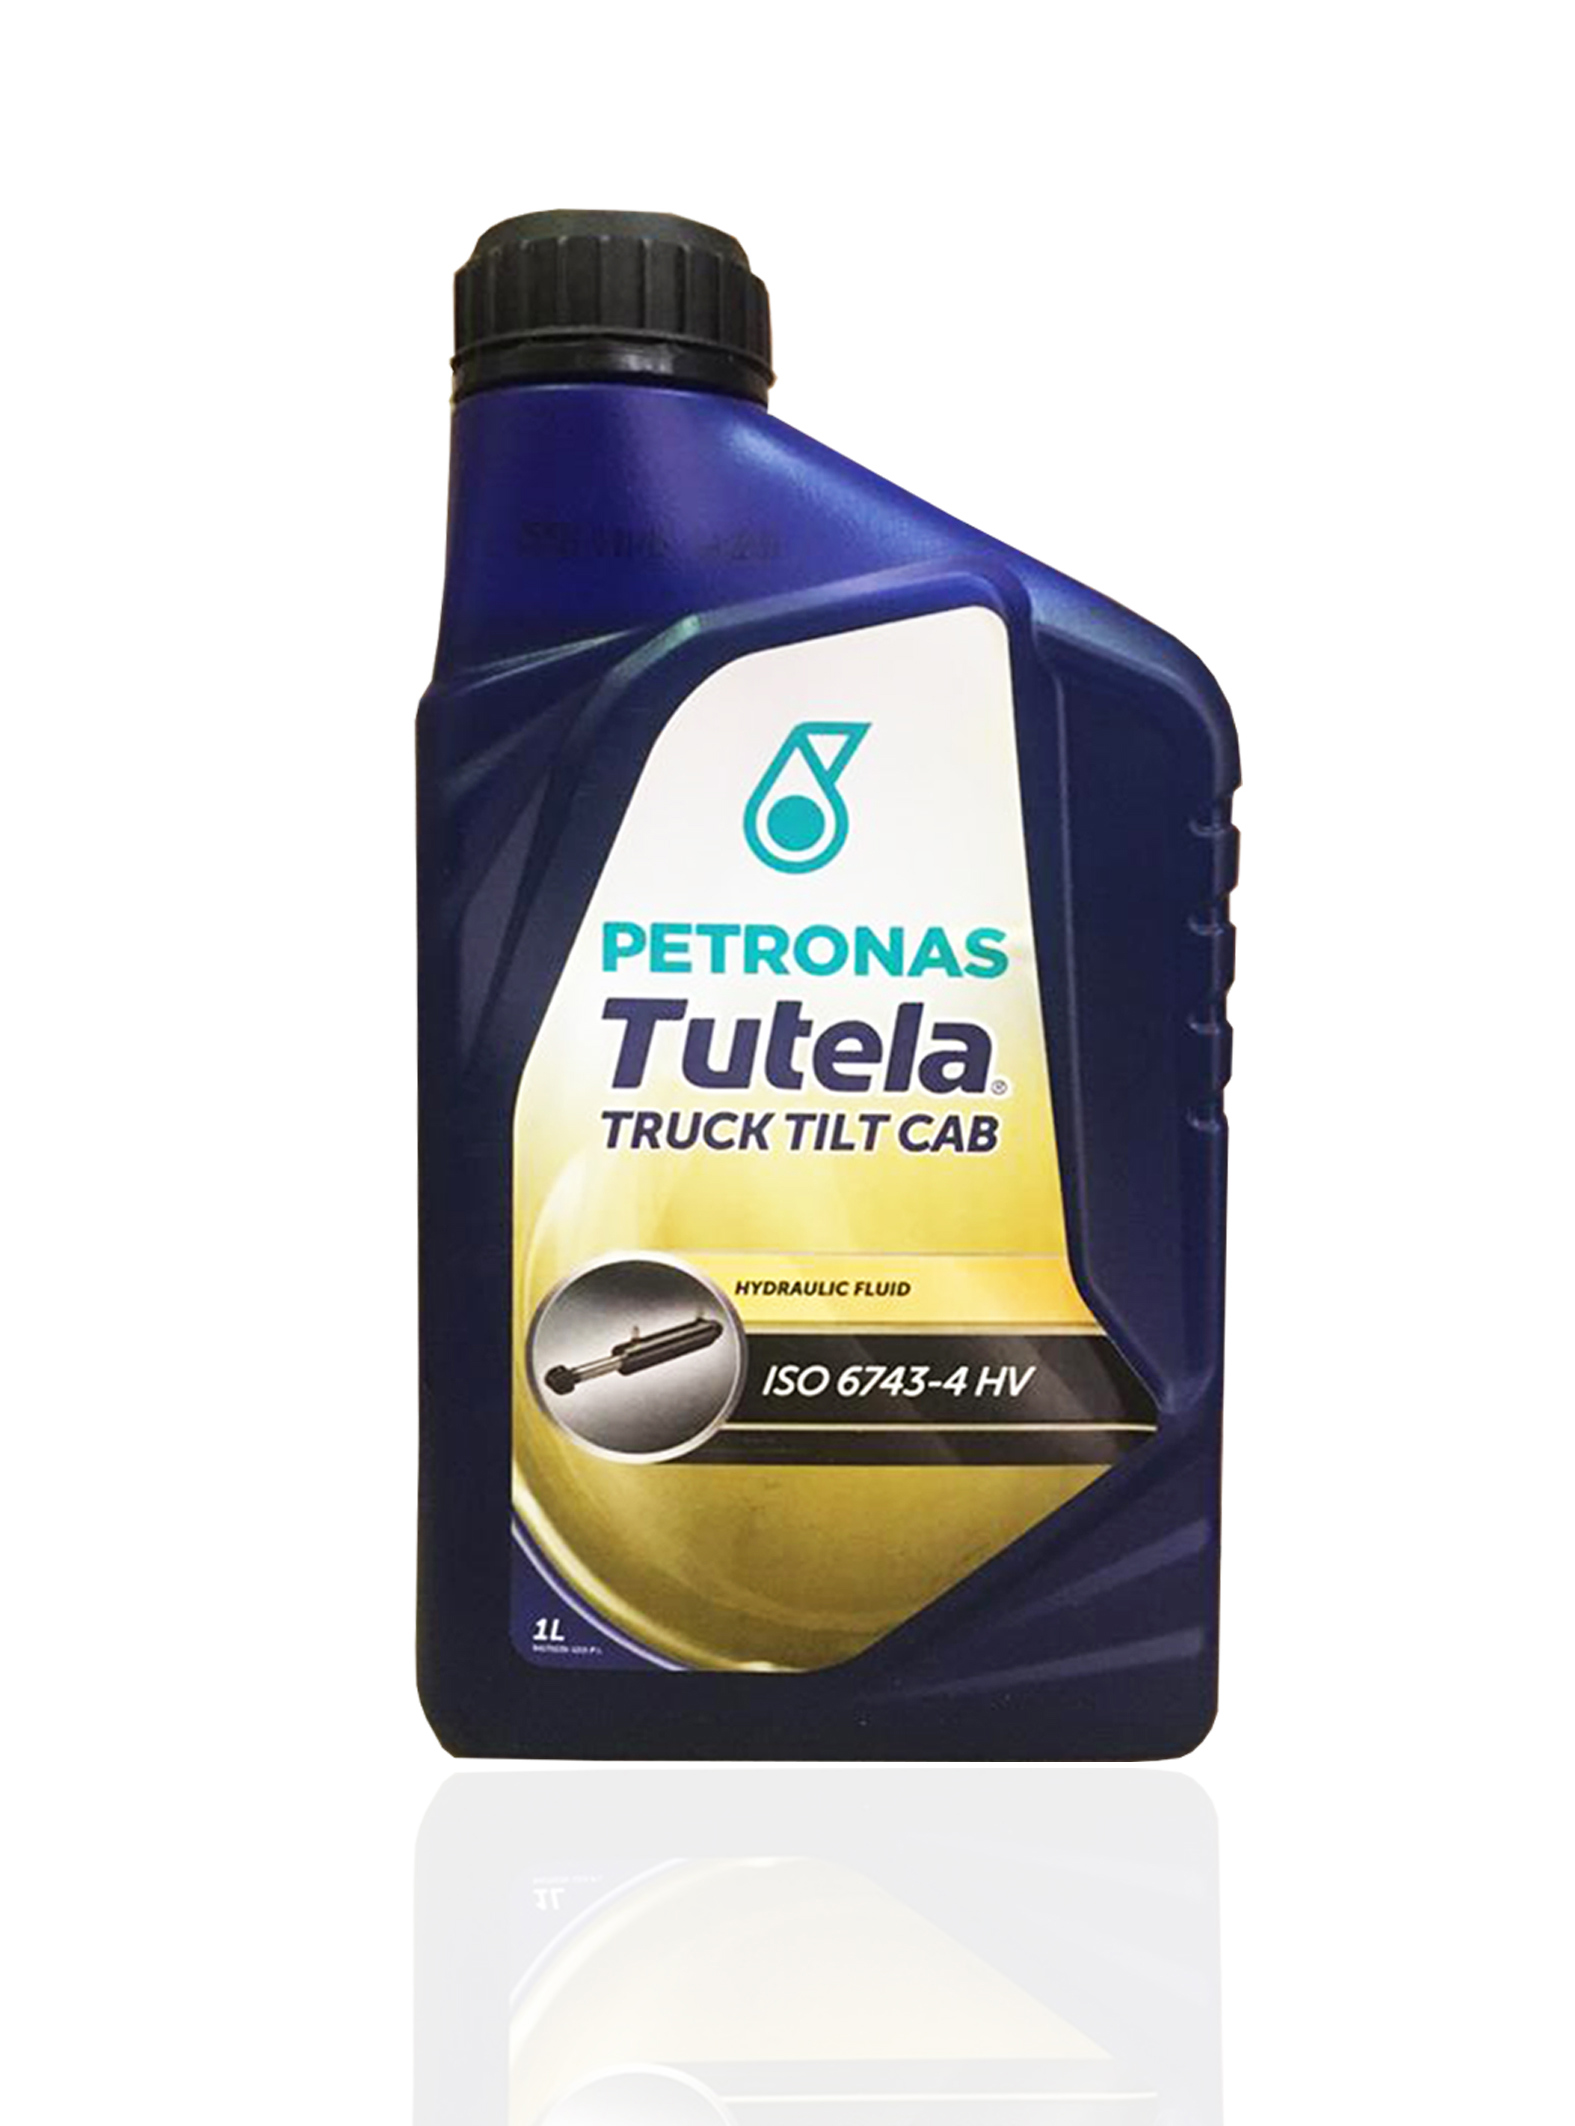  Petronas Tutela HYDRAULIC 1 л по цене null ₽/шт.   .